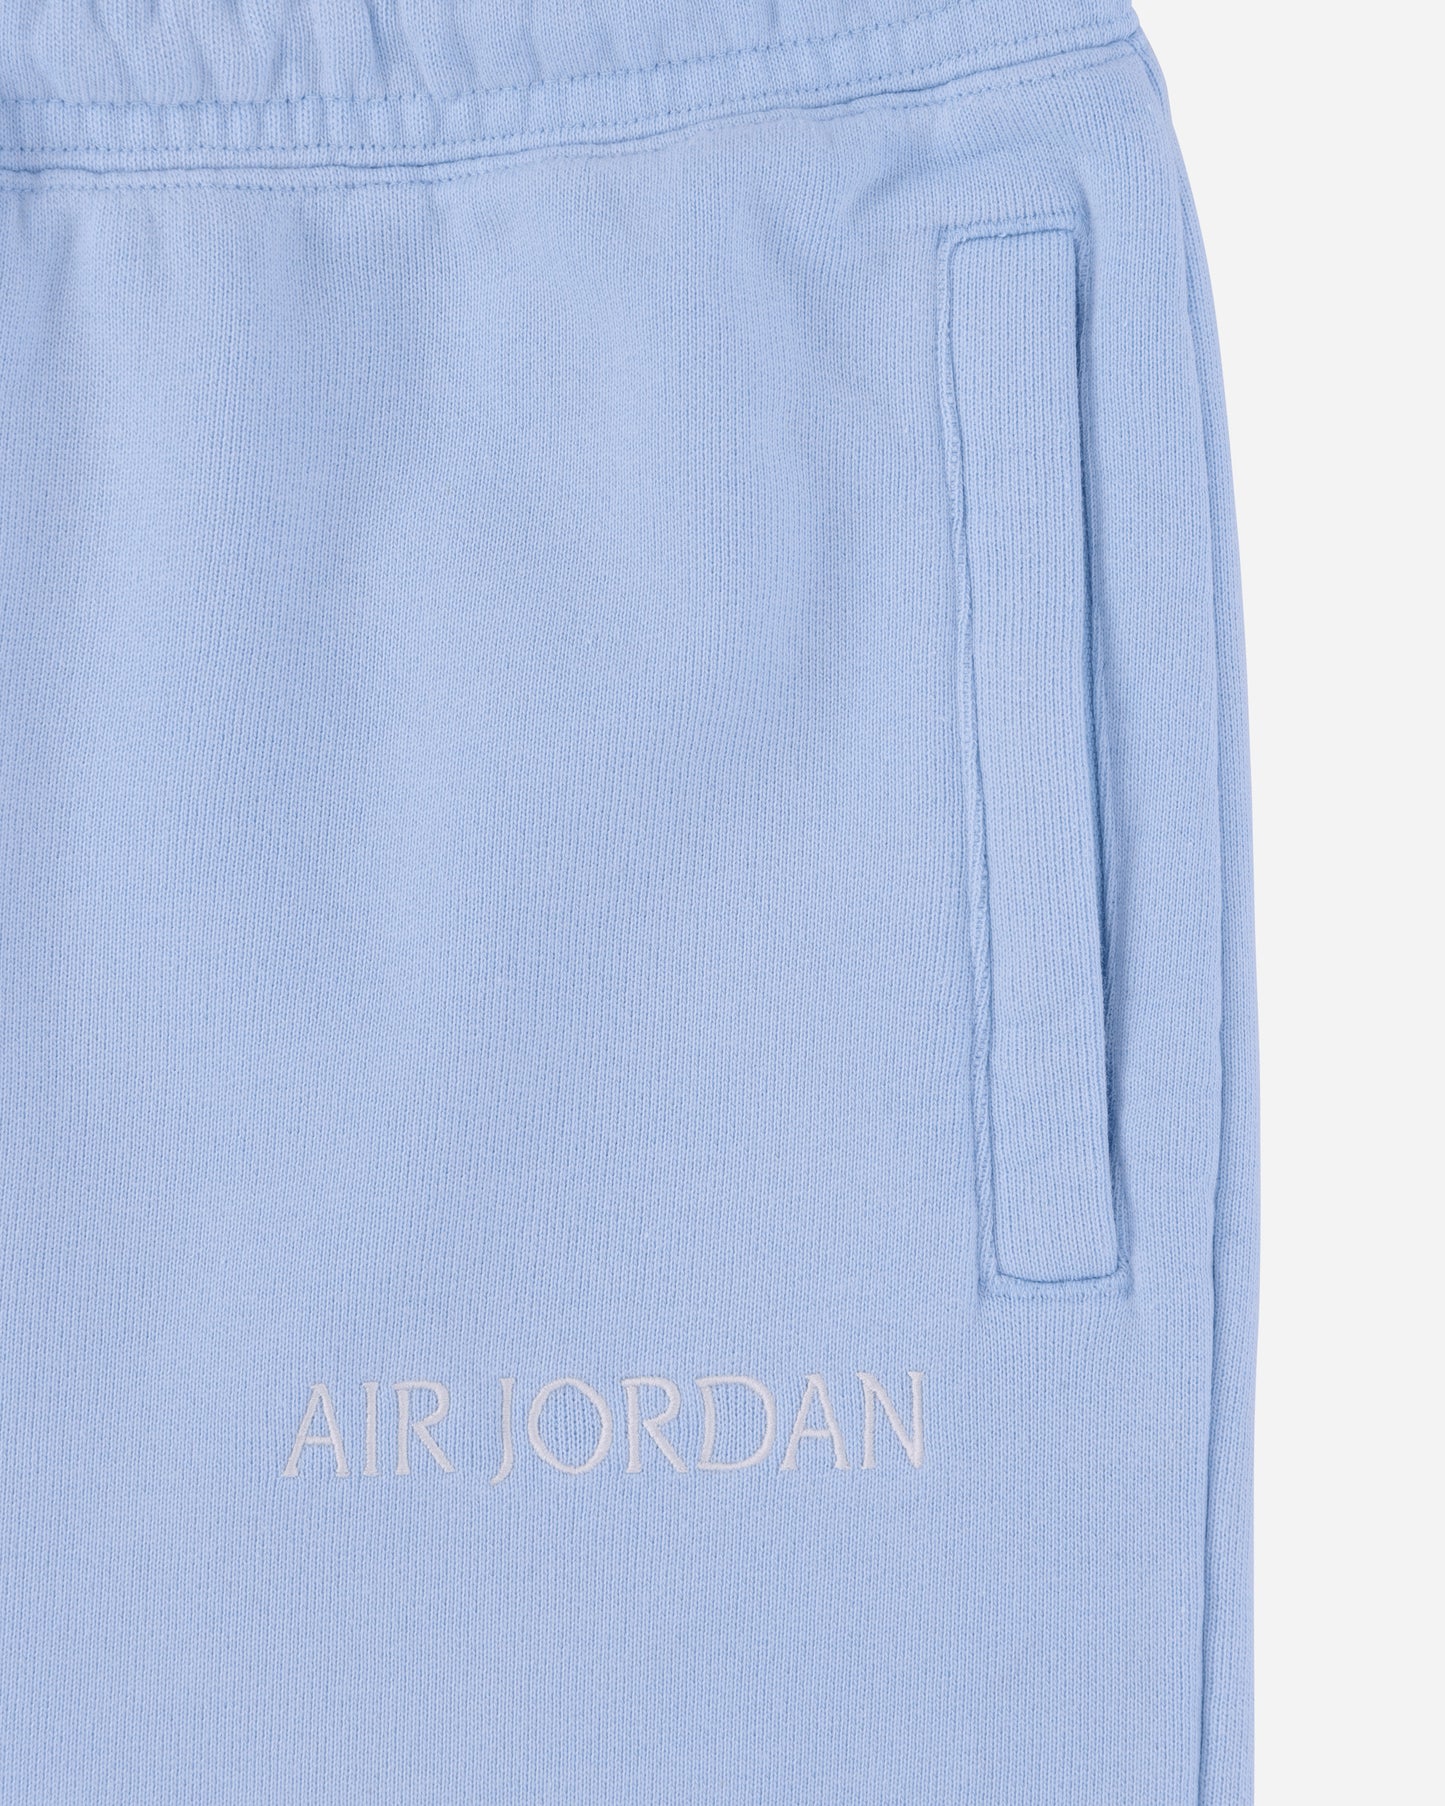 Nike Jordan Wmns J Air Jdn Sp Wm Flc Pant Ice Blue/Sail Pants Sweatpants DV6471-411